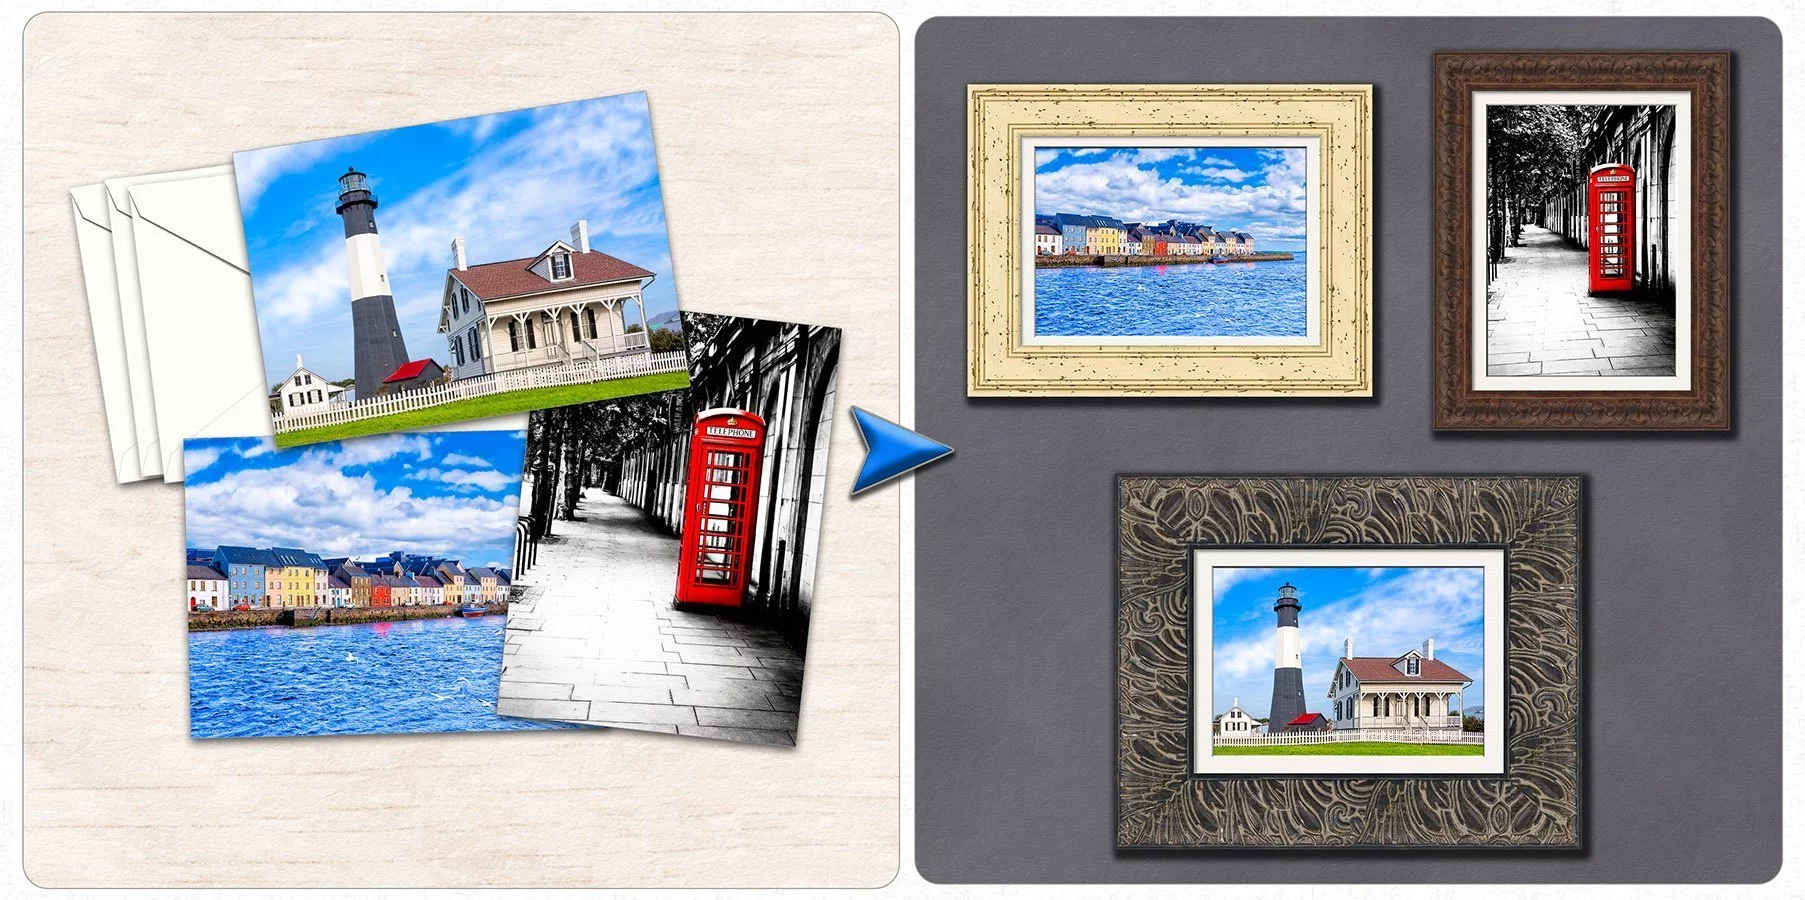 Affordable Art Secret - 5x7 Greeting Cards As Framed Art